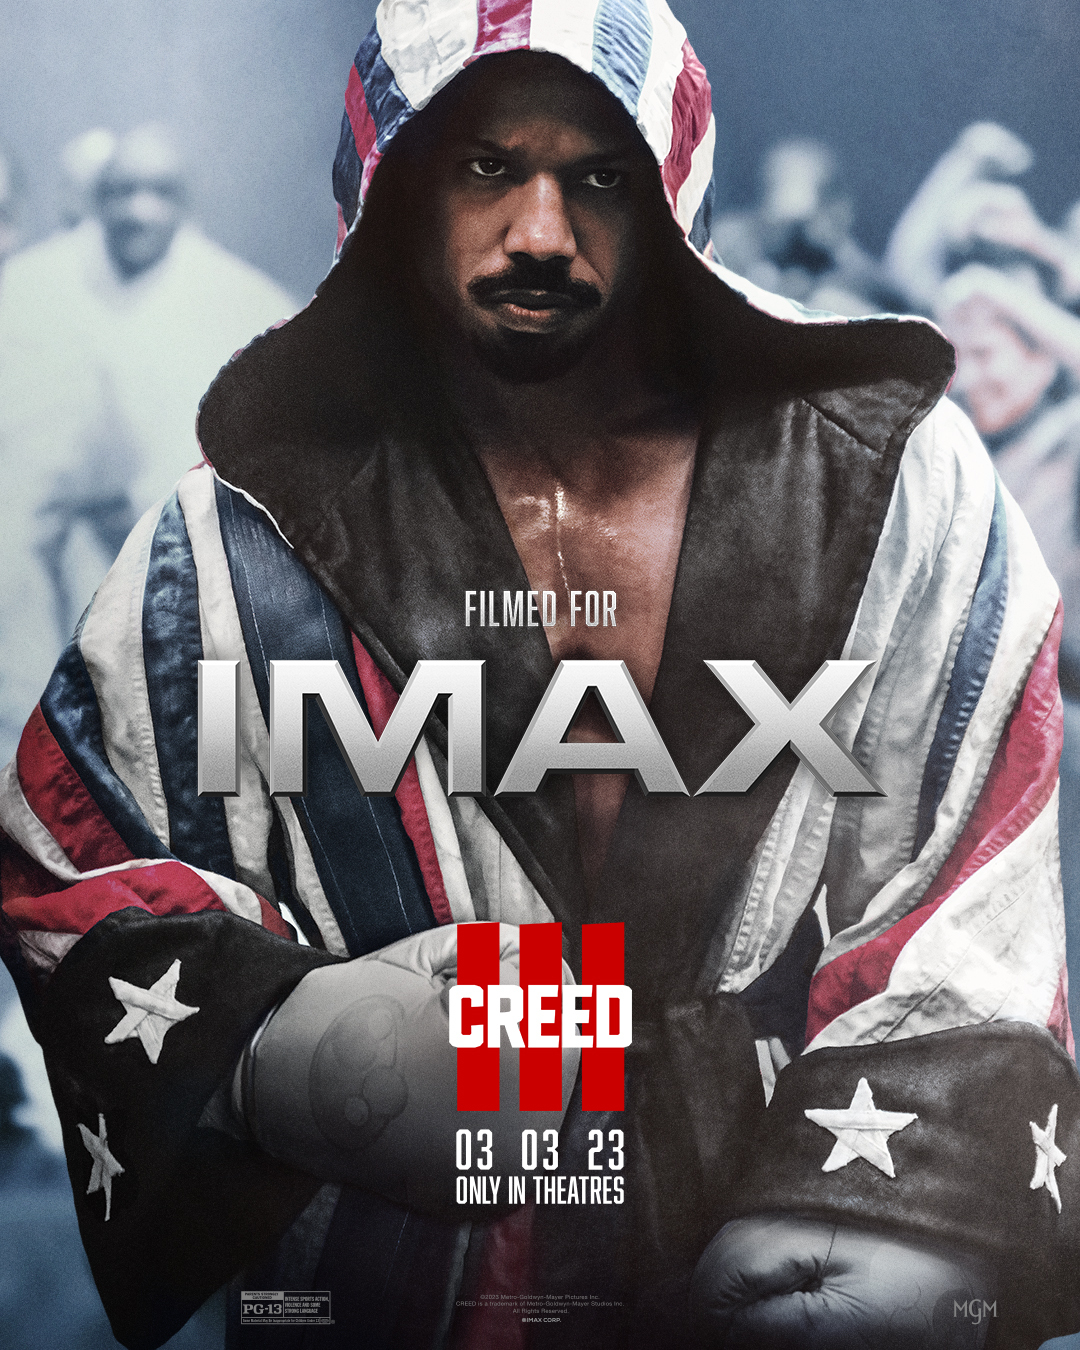 Creed 3 IMAX poster